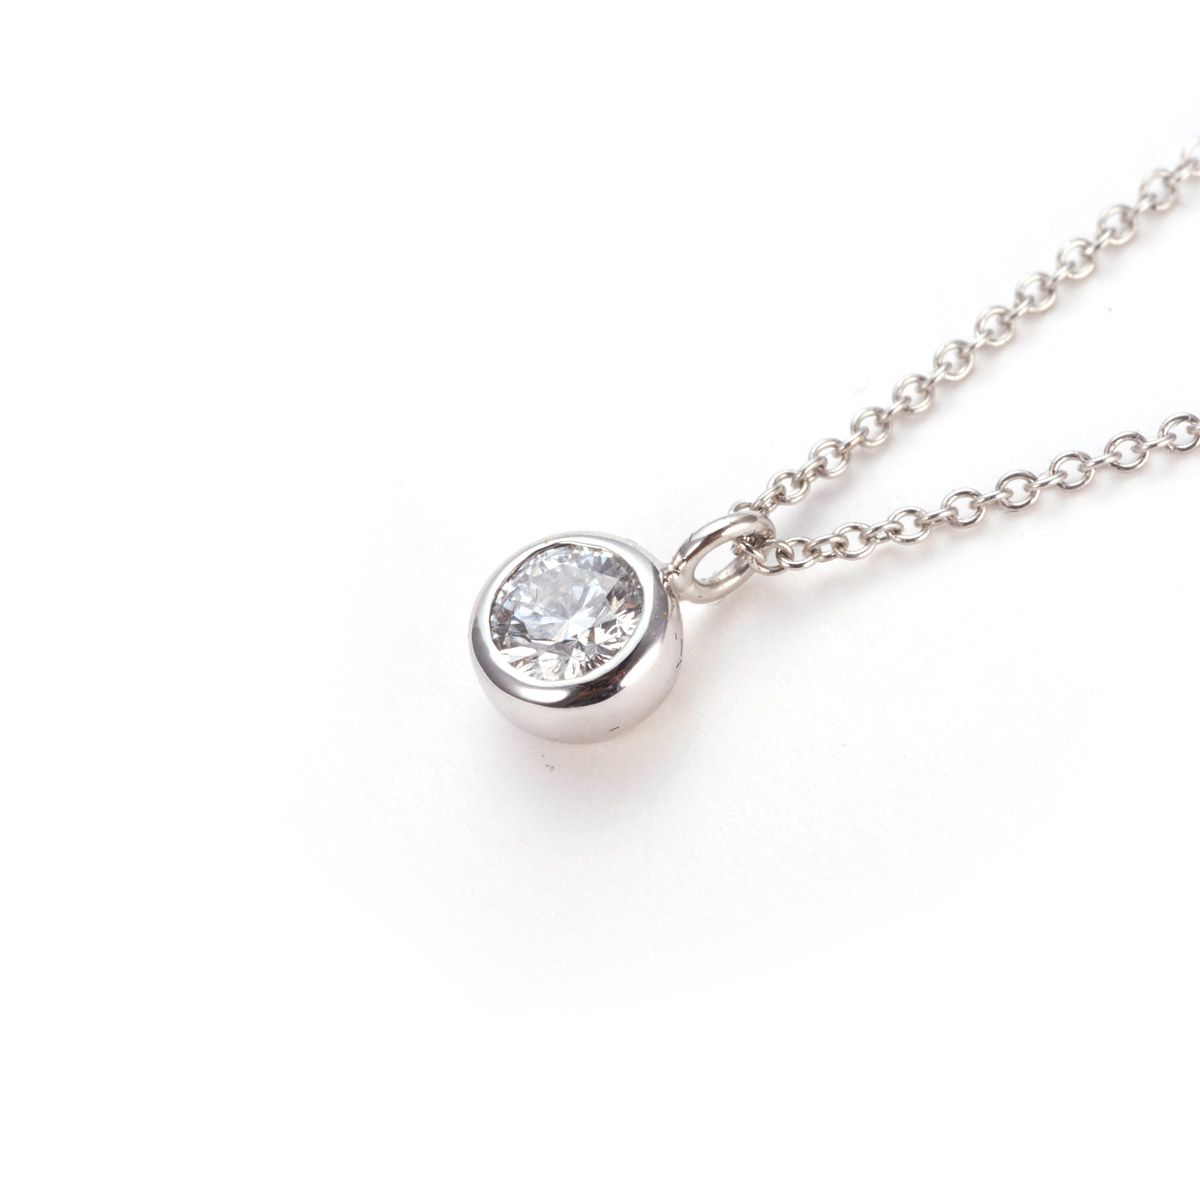  White Diamond Necklace, 0.35 Carat, Round shape, IGI Certified, 134459479